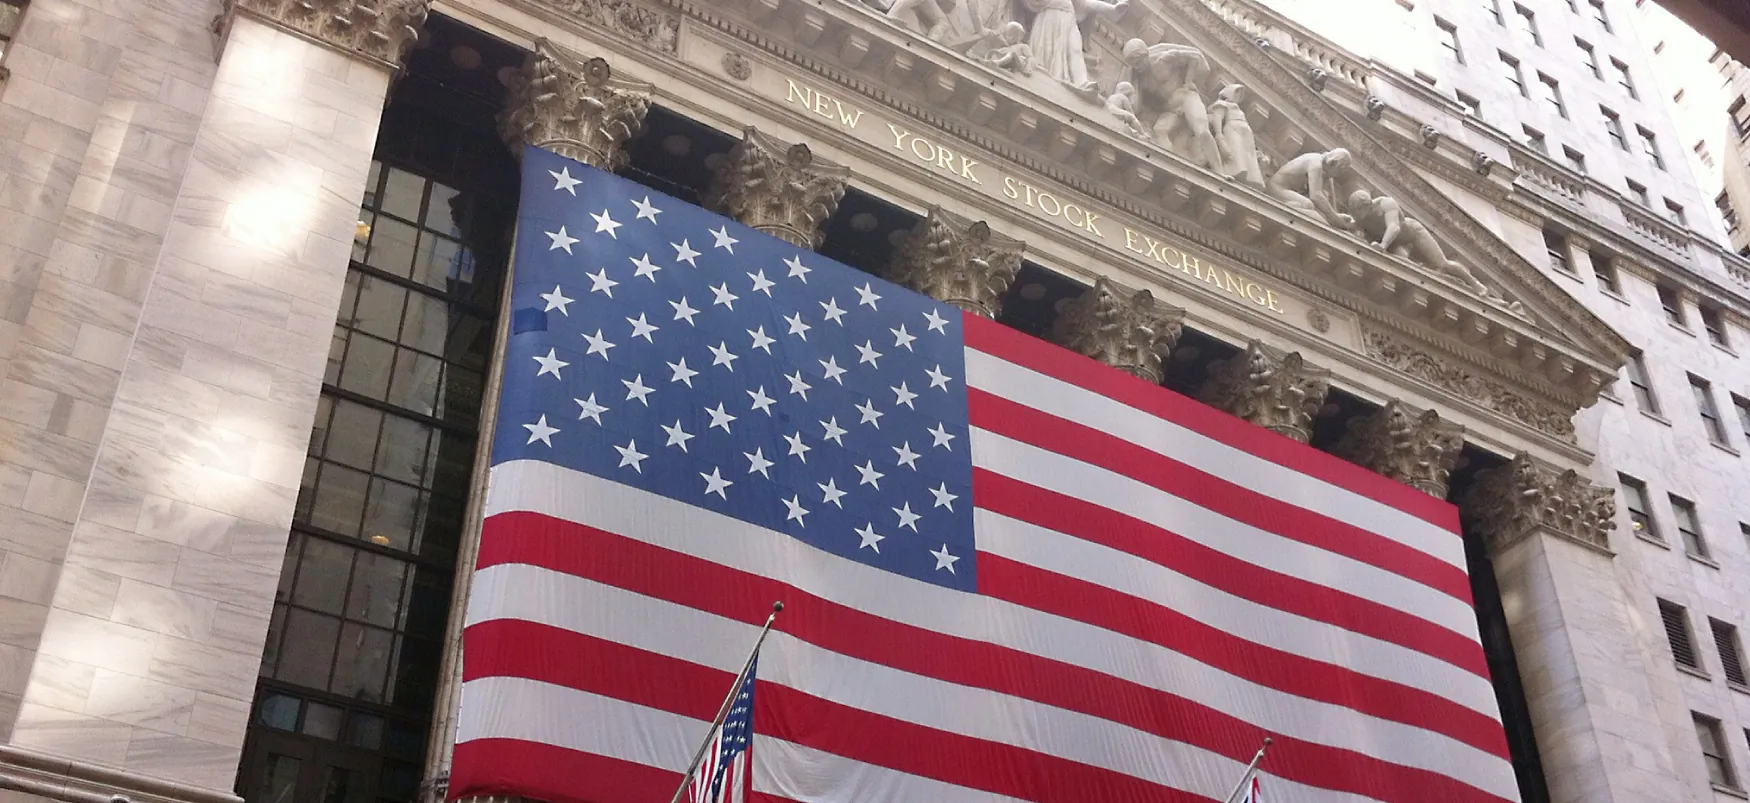 Huge US flag outside New York Stock Exchange.